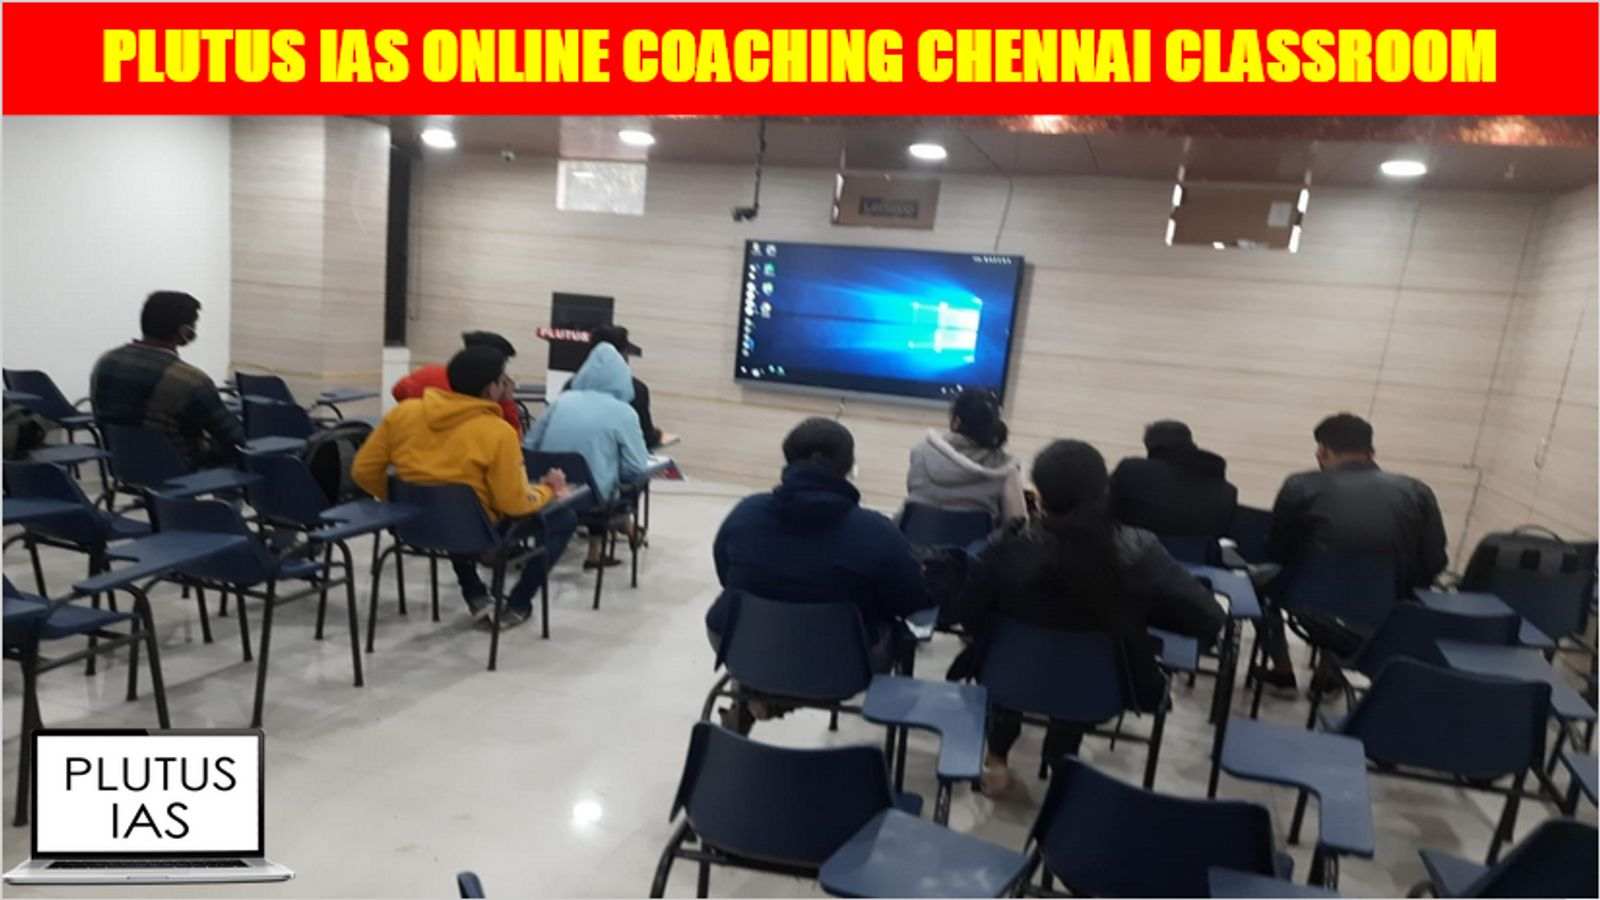 Plutus IAS Online Coaching Chennai Class Room